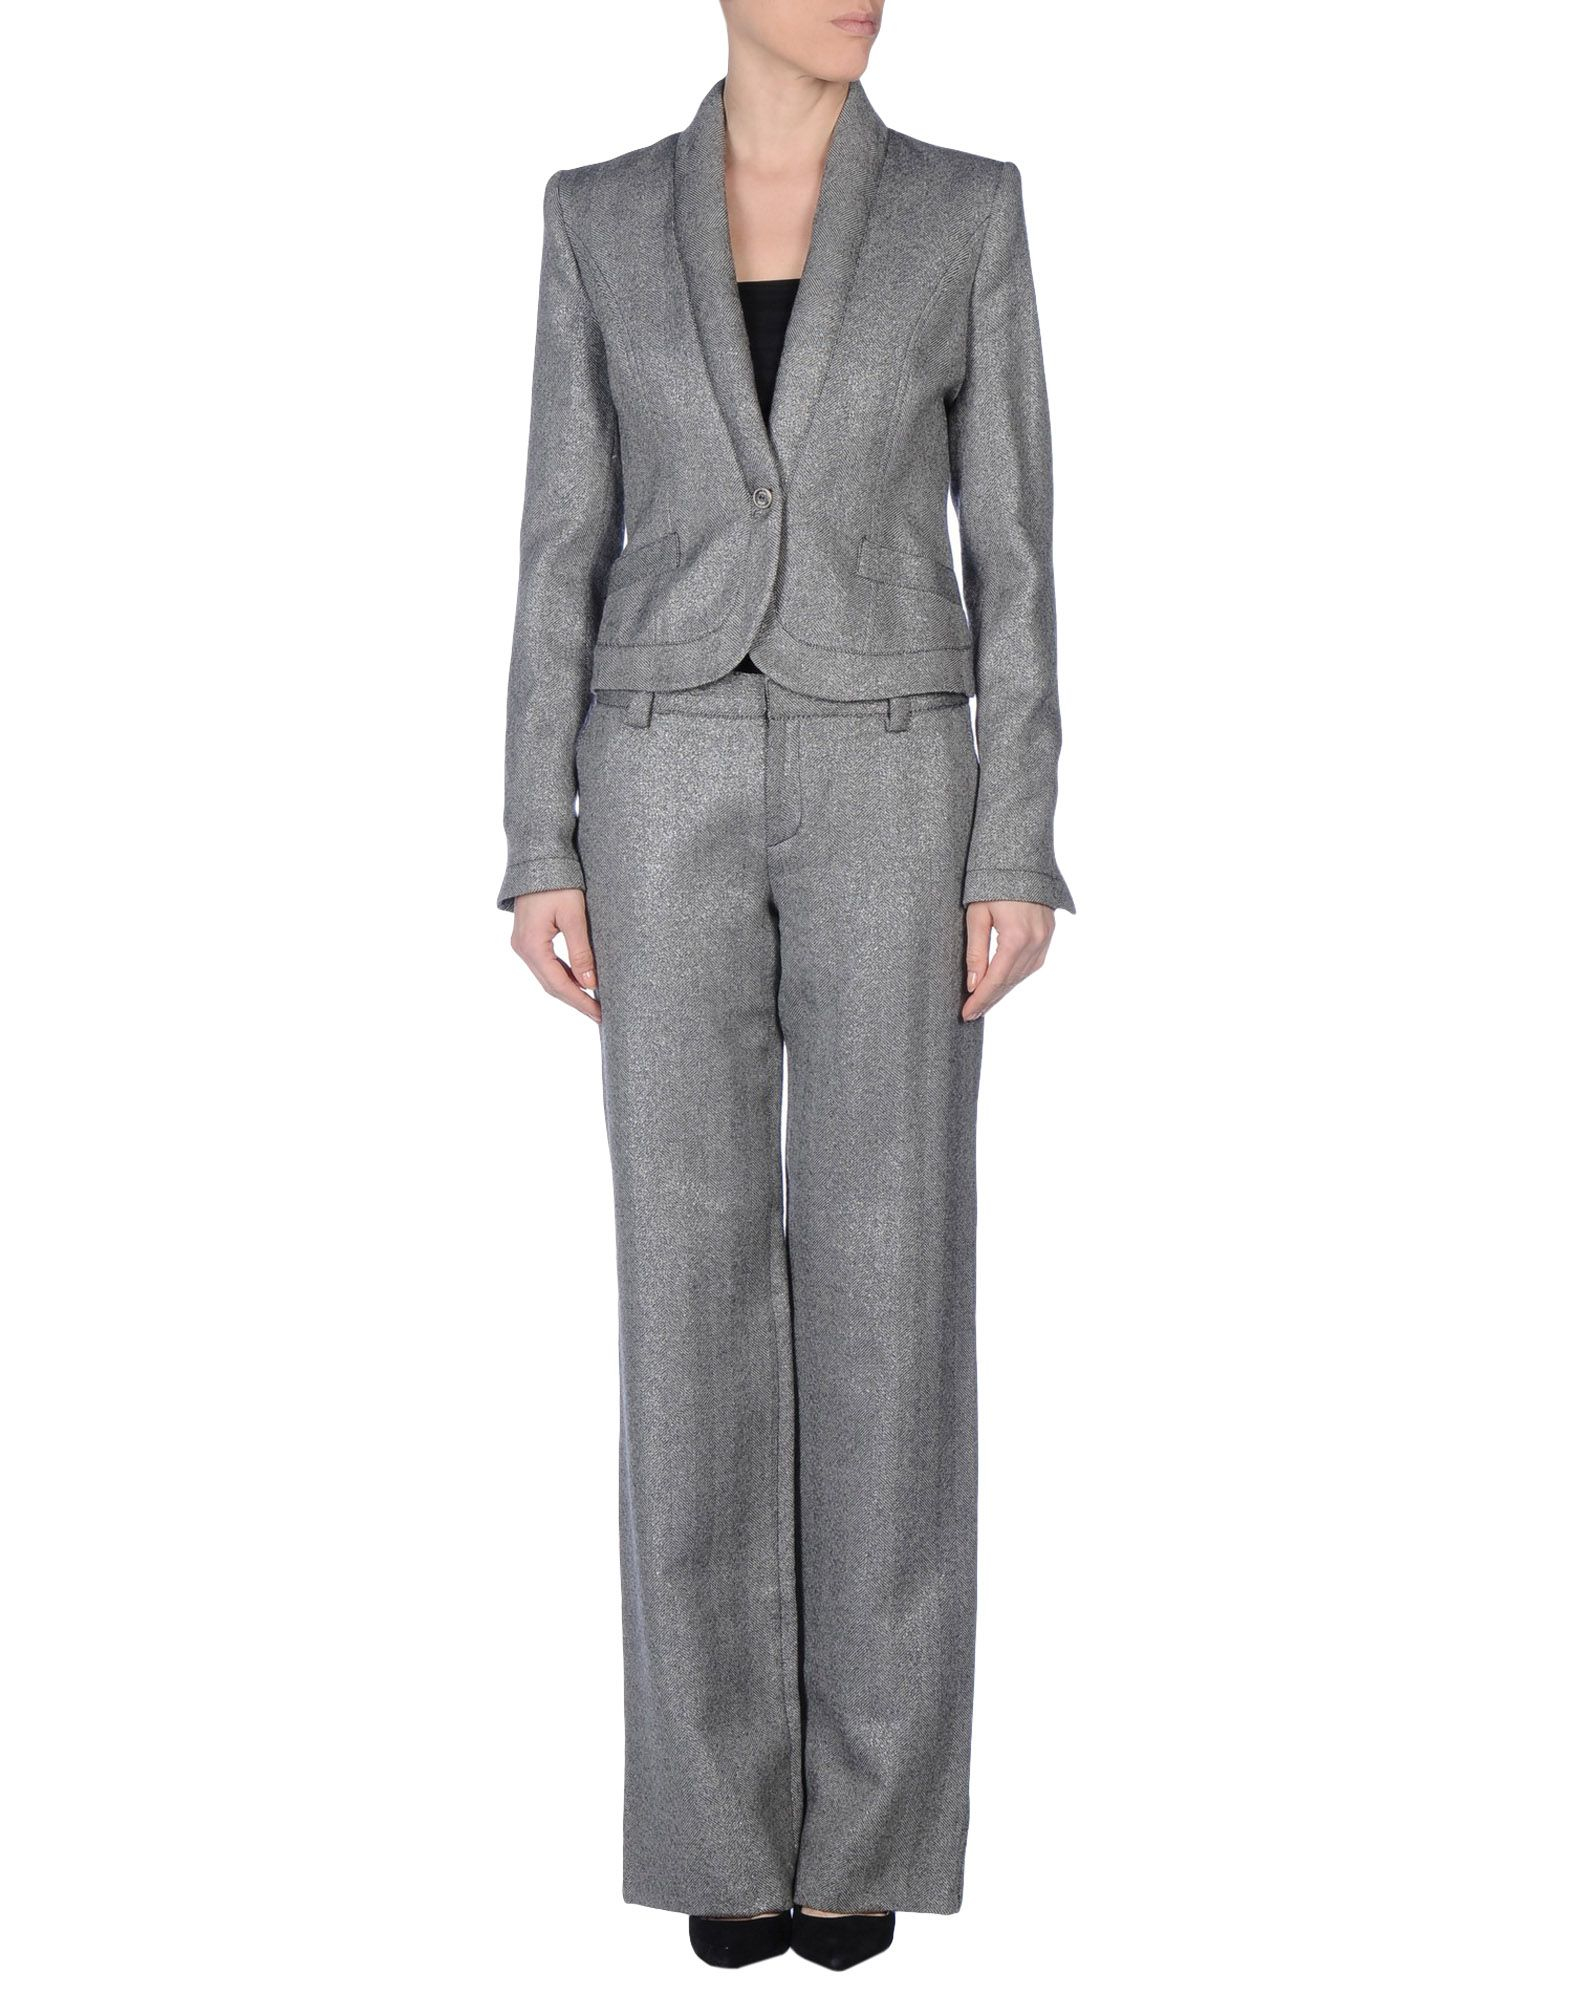 Lyst - Just Cavalli Women's Suit in Gray